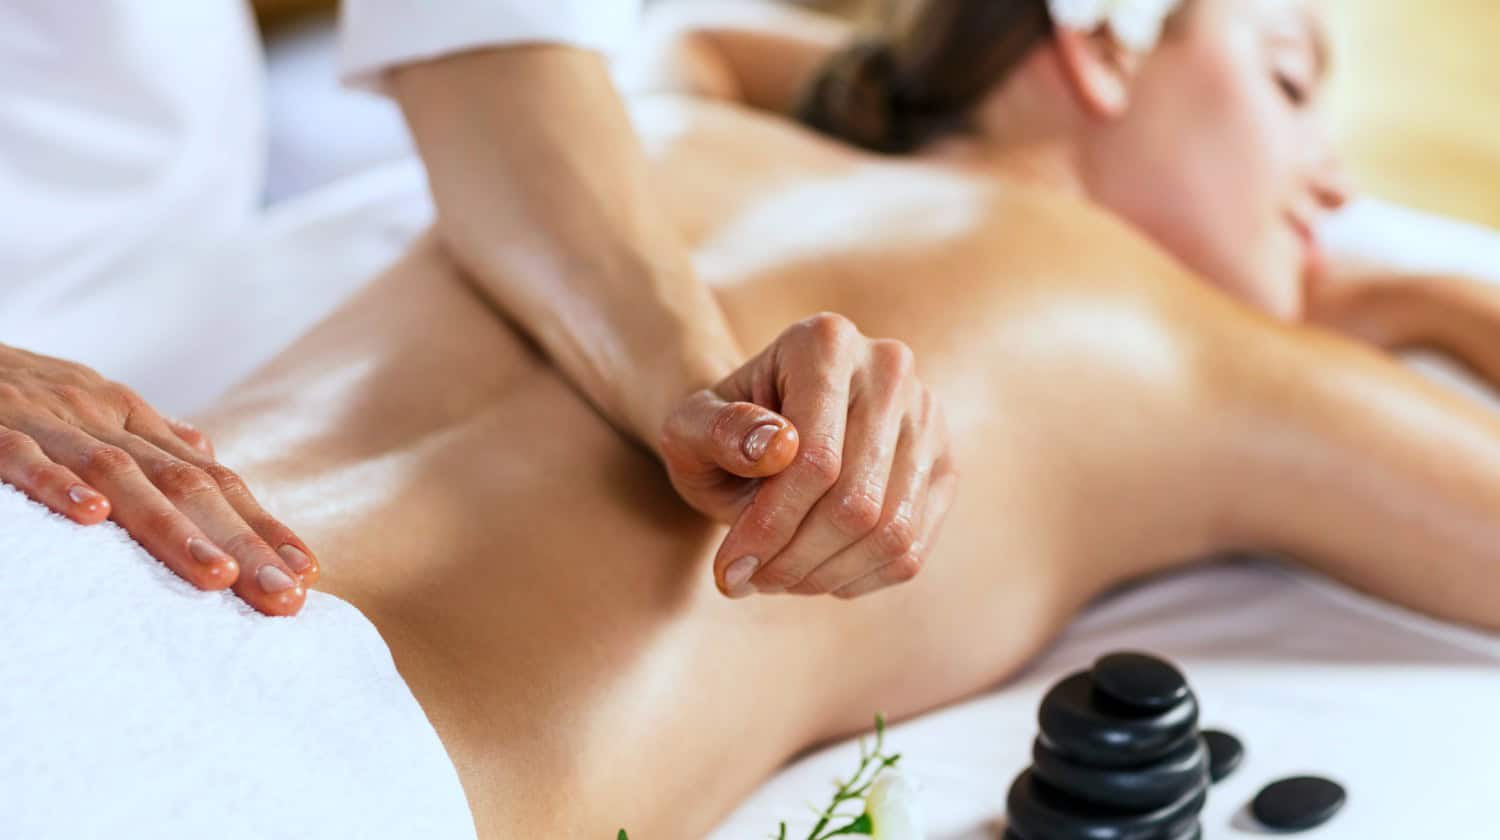 tantra massage las vegas by jax solomon testimonial relaxing massage